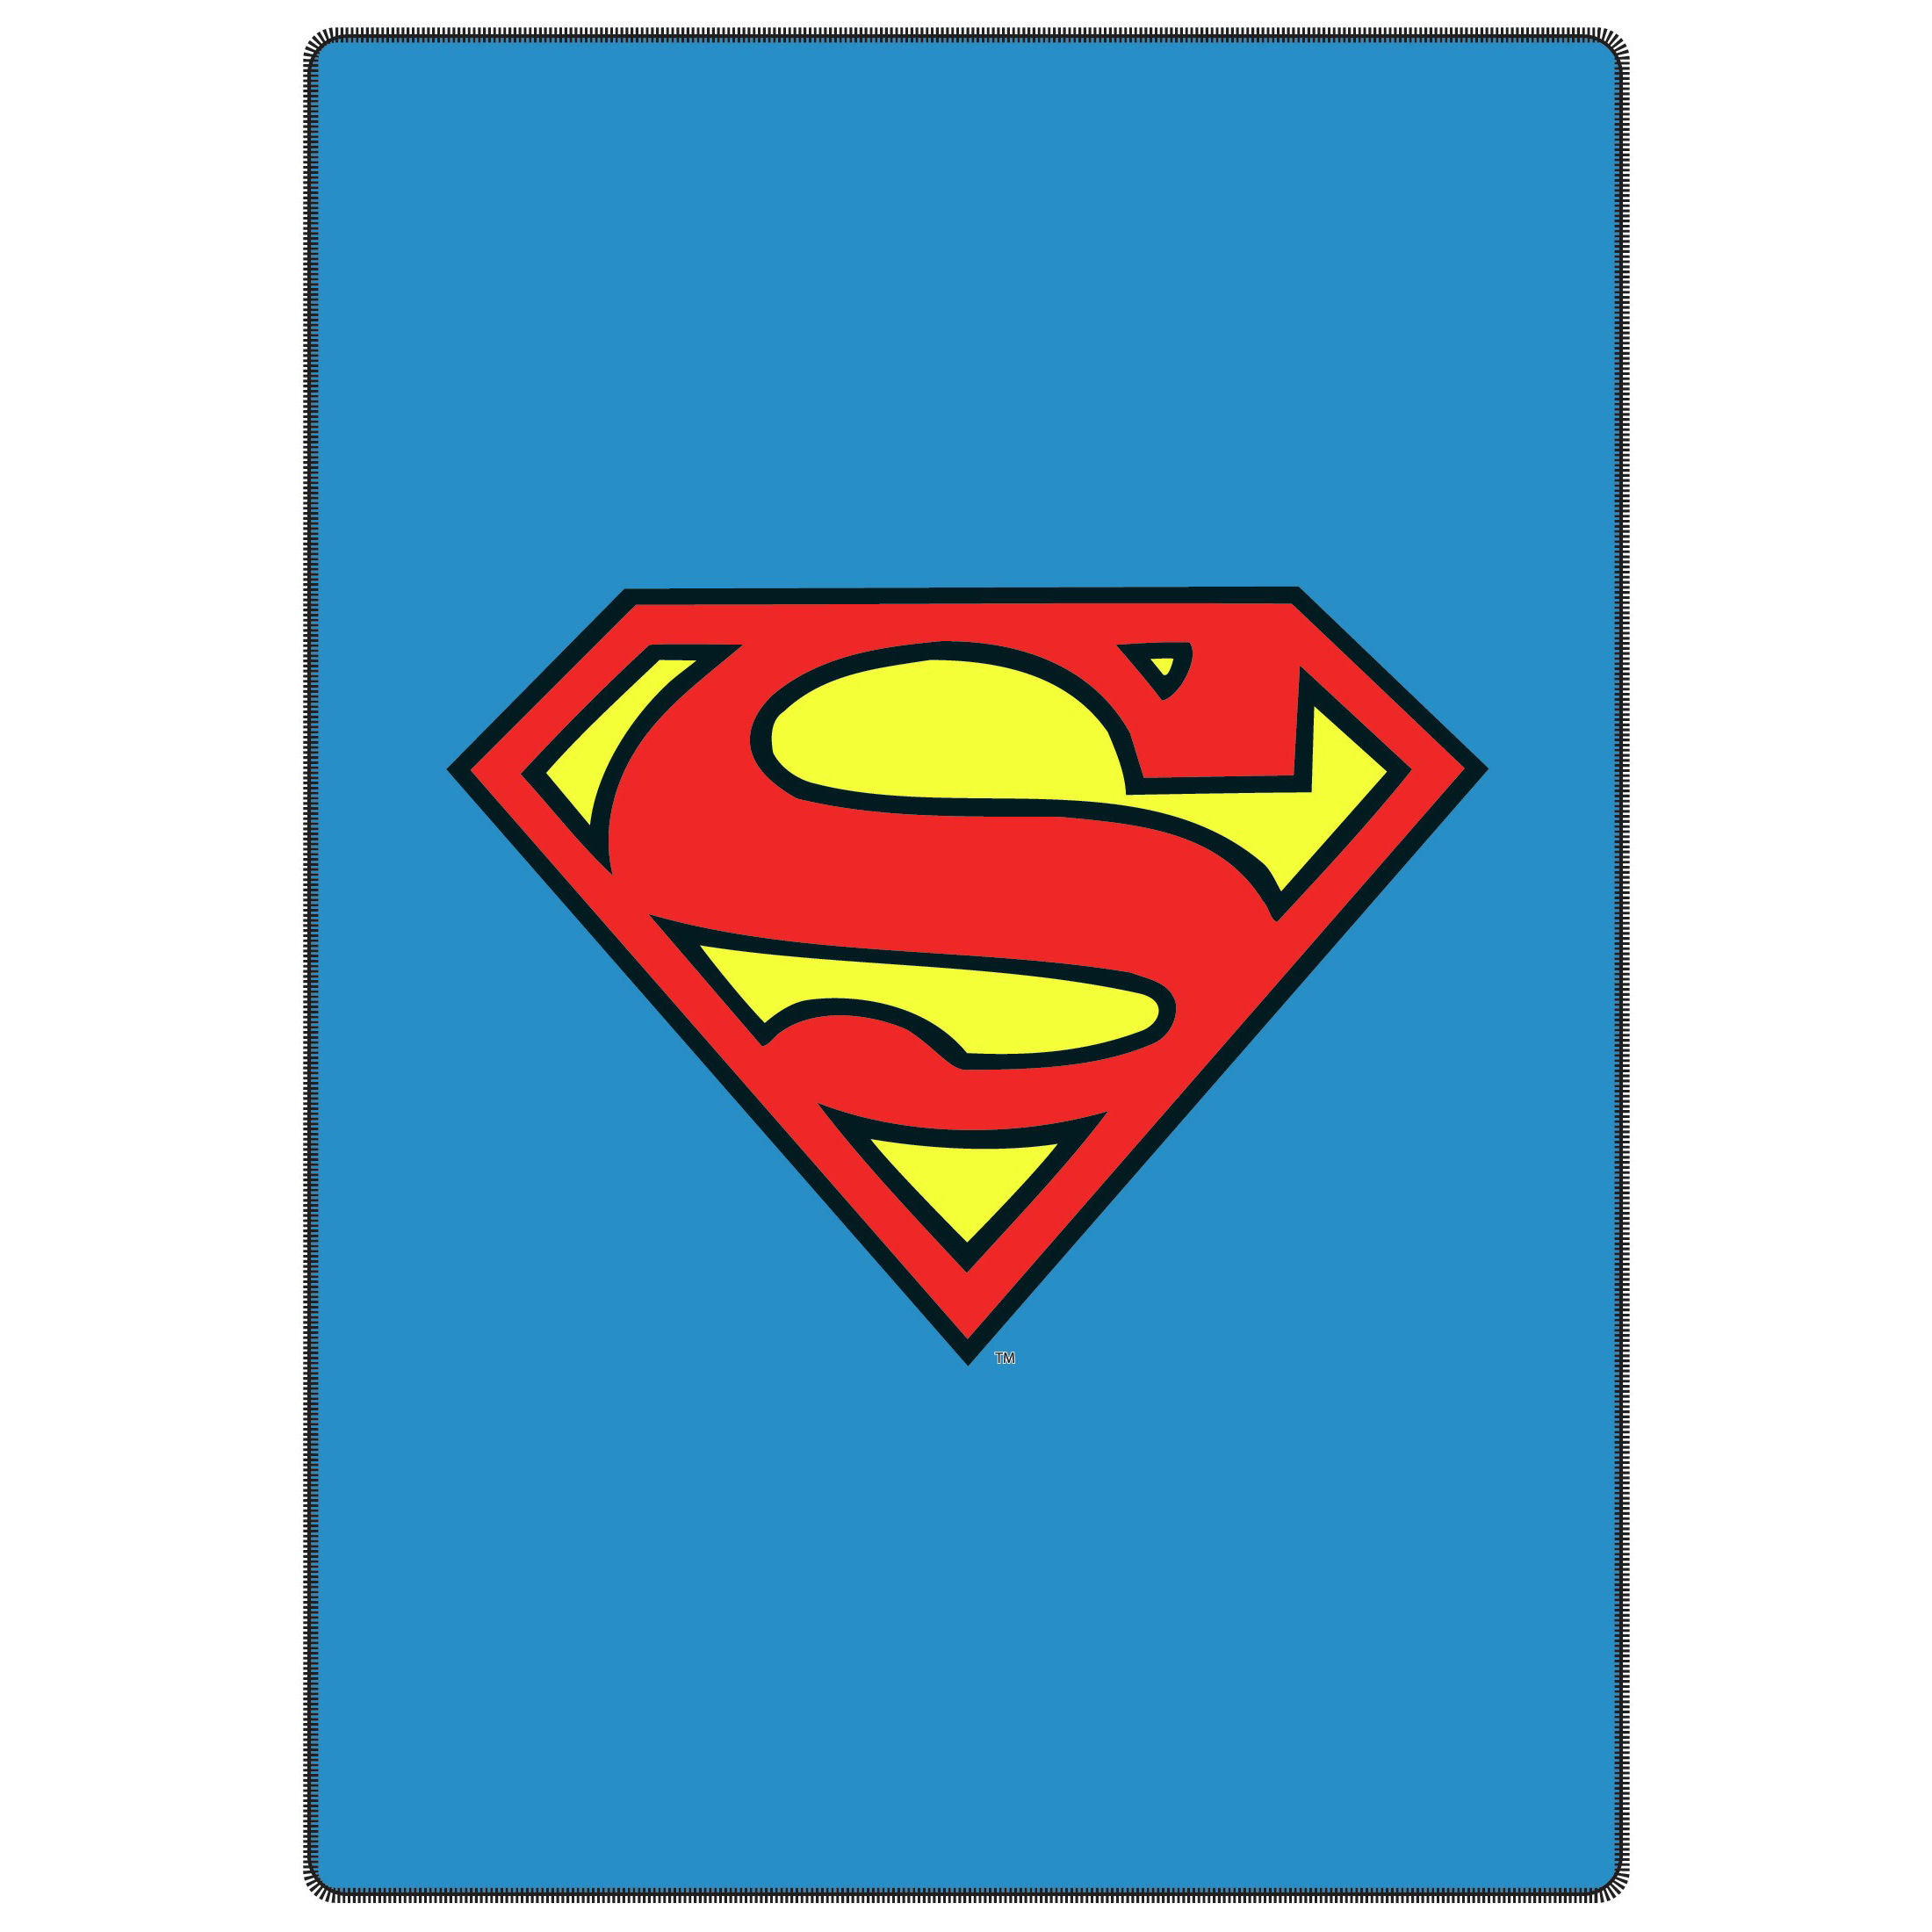 clip art of superman logo - photo #25